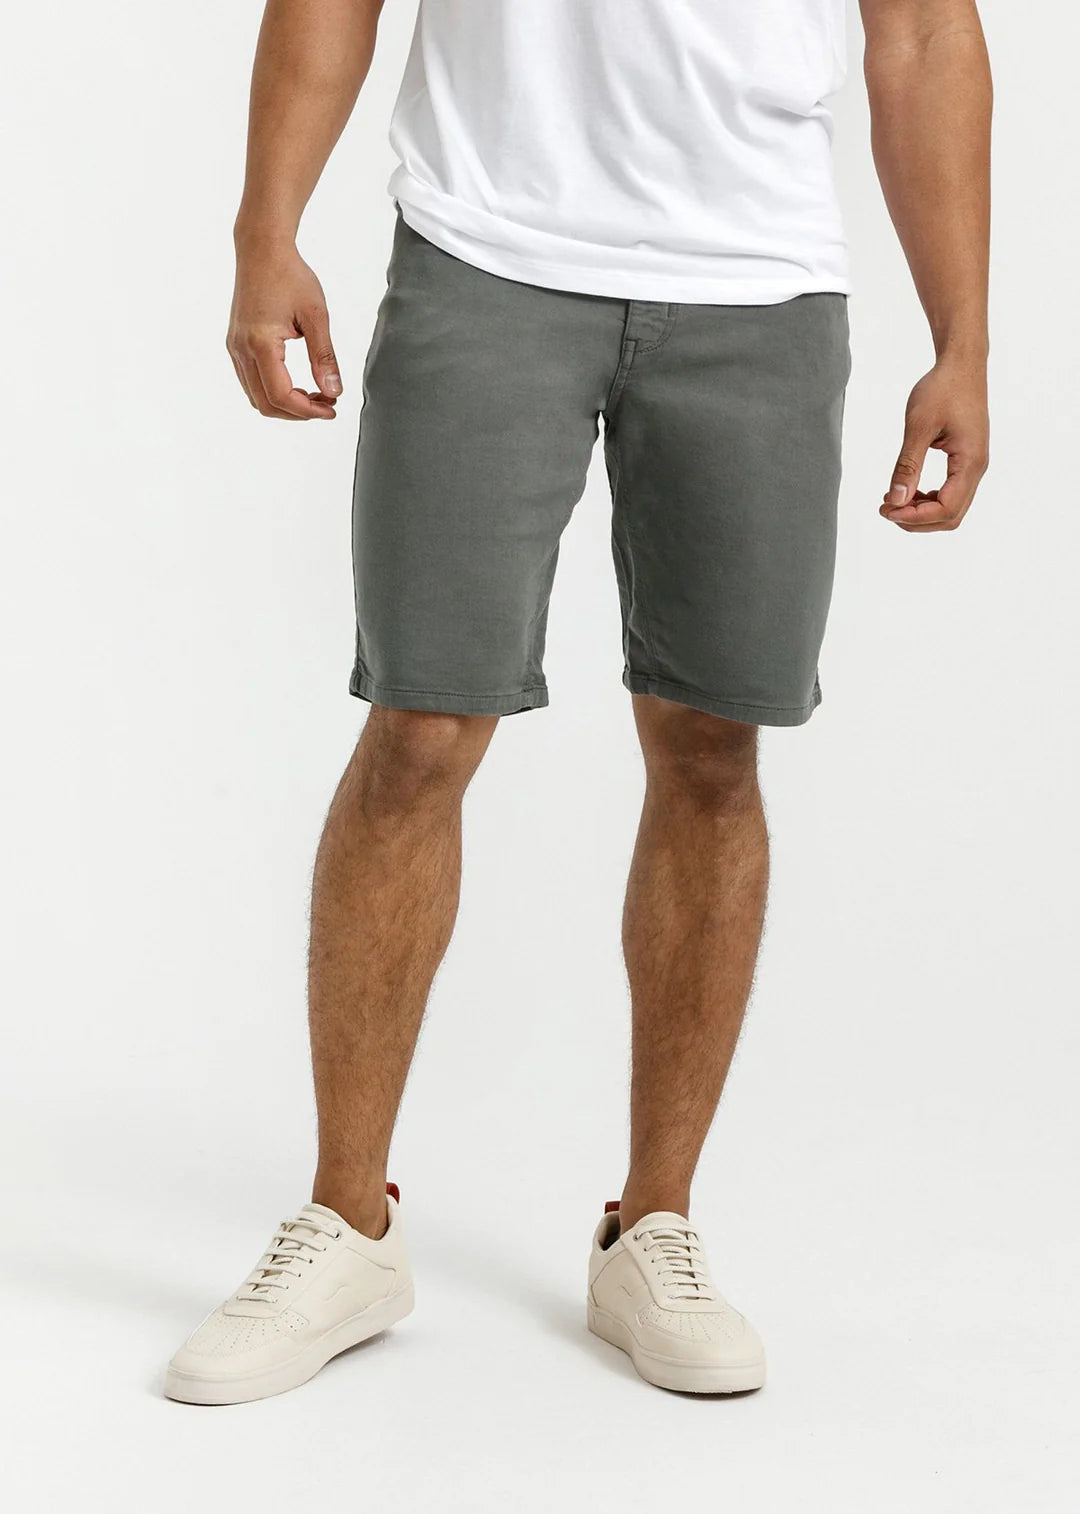 Duer No Sweat Relaxed Shorts - Men's